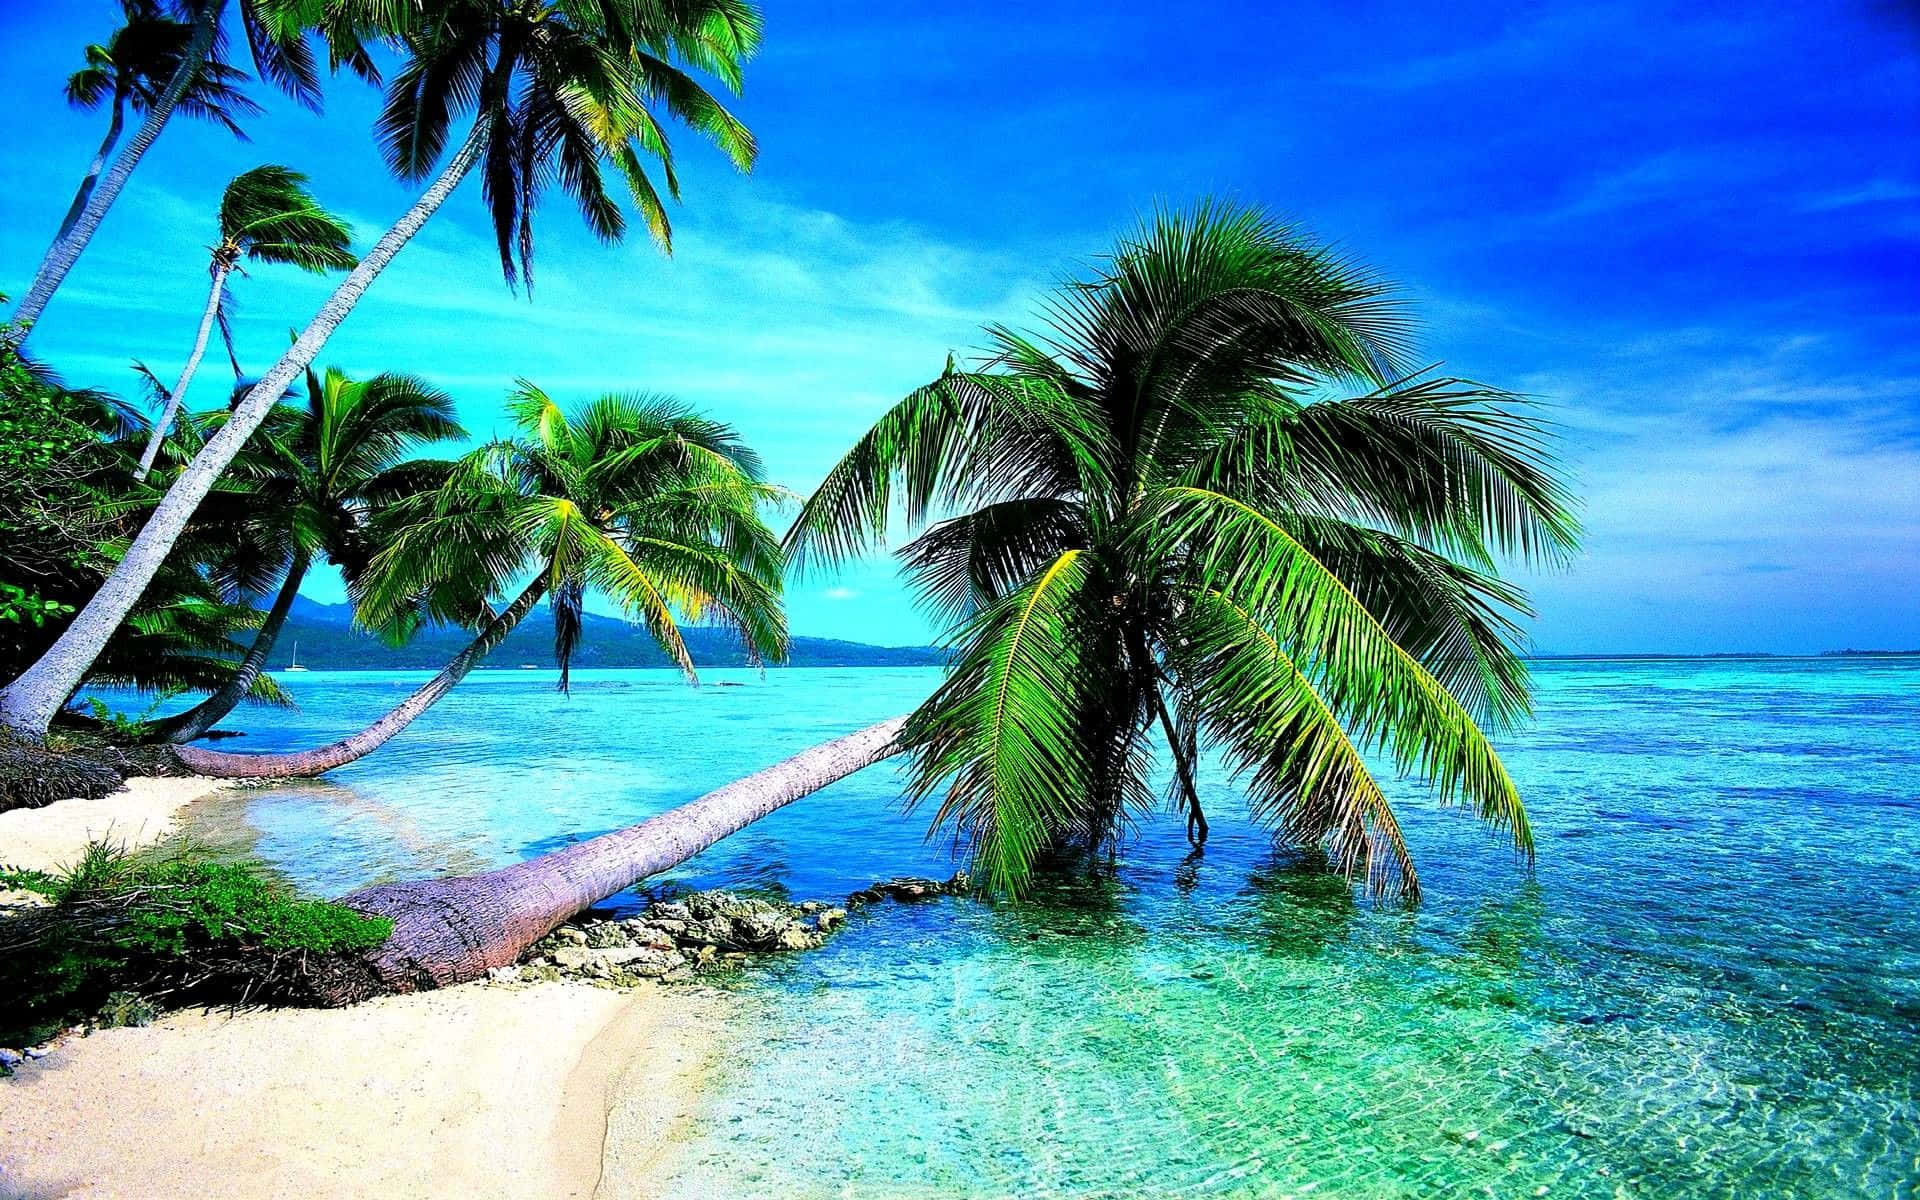 Enjoy the beauty of a tranquil tropical beach. Wallpaper